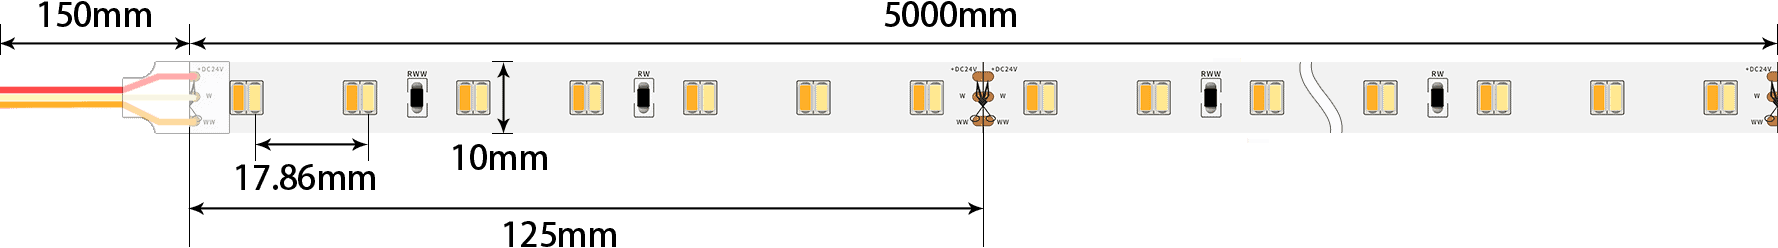 LED strips_RRT074C_size